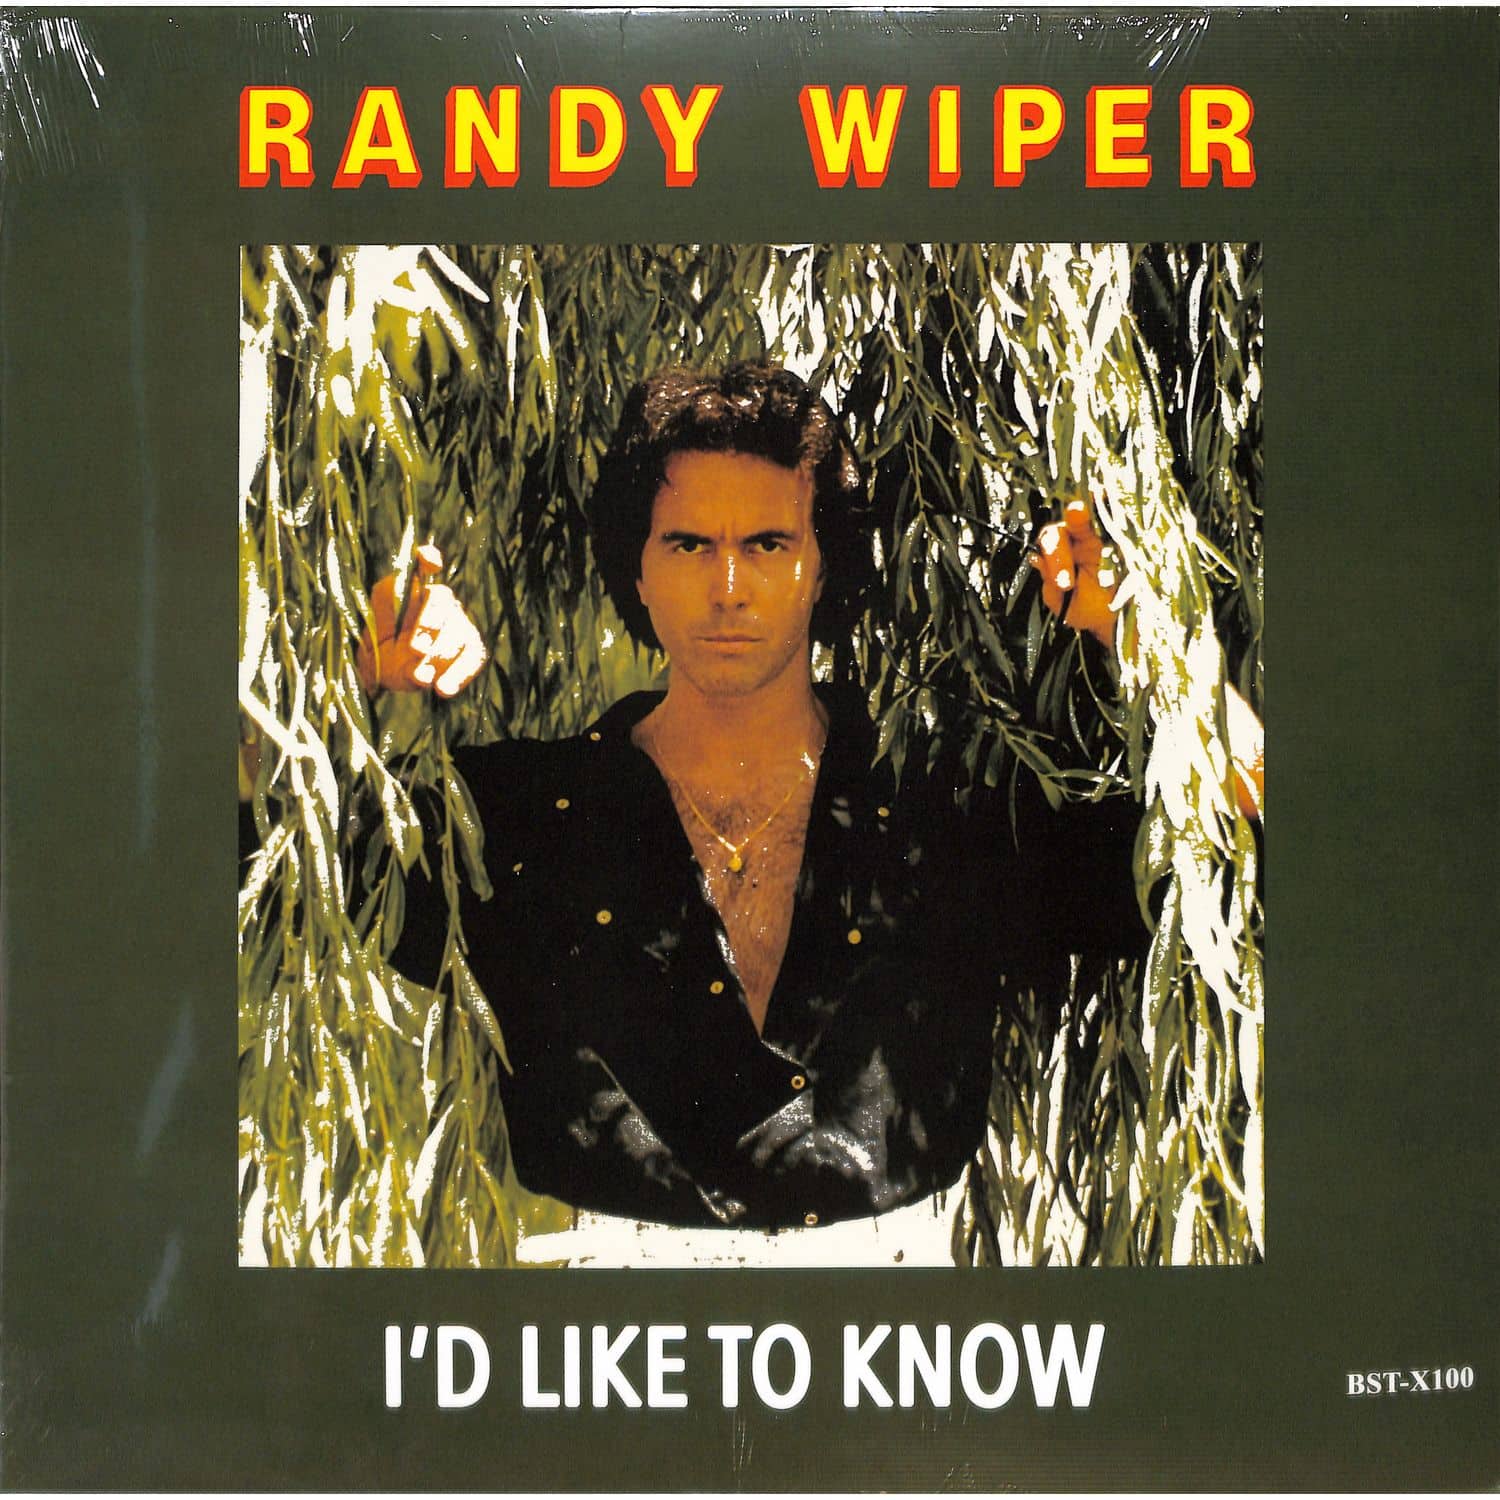 Randy Wiper - ID LIKE TO KNOW